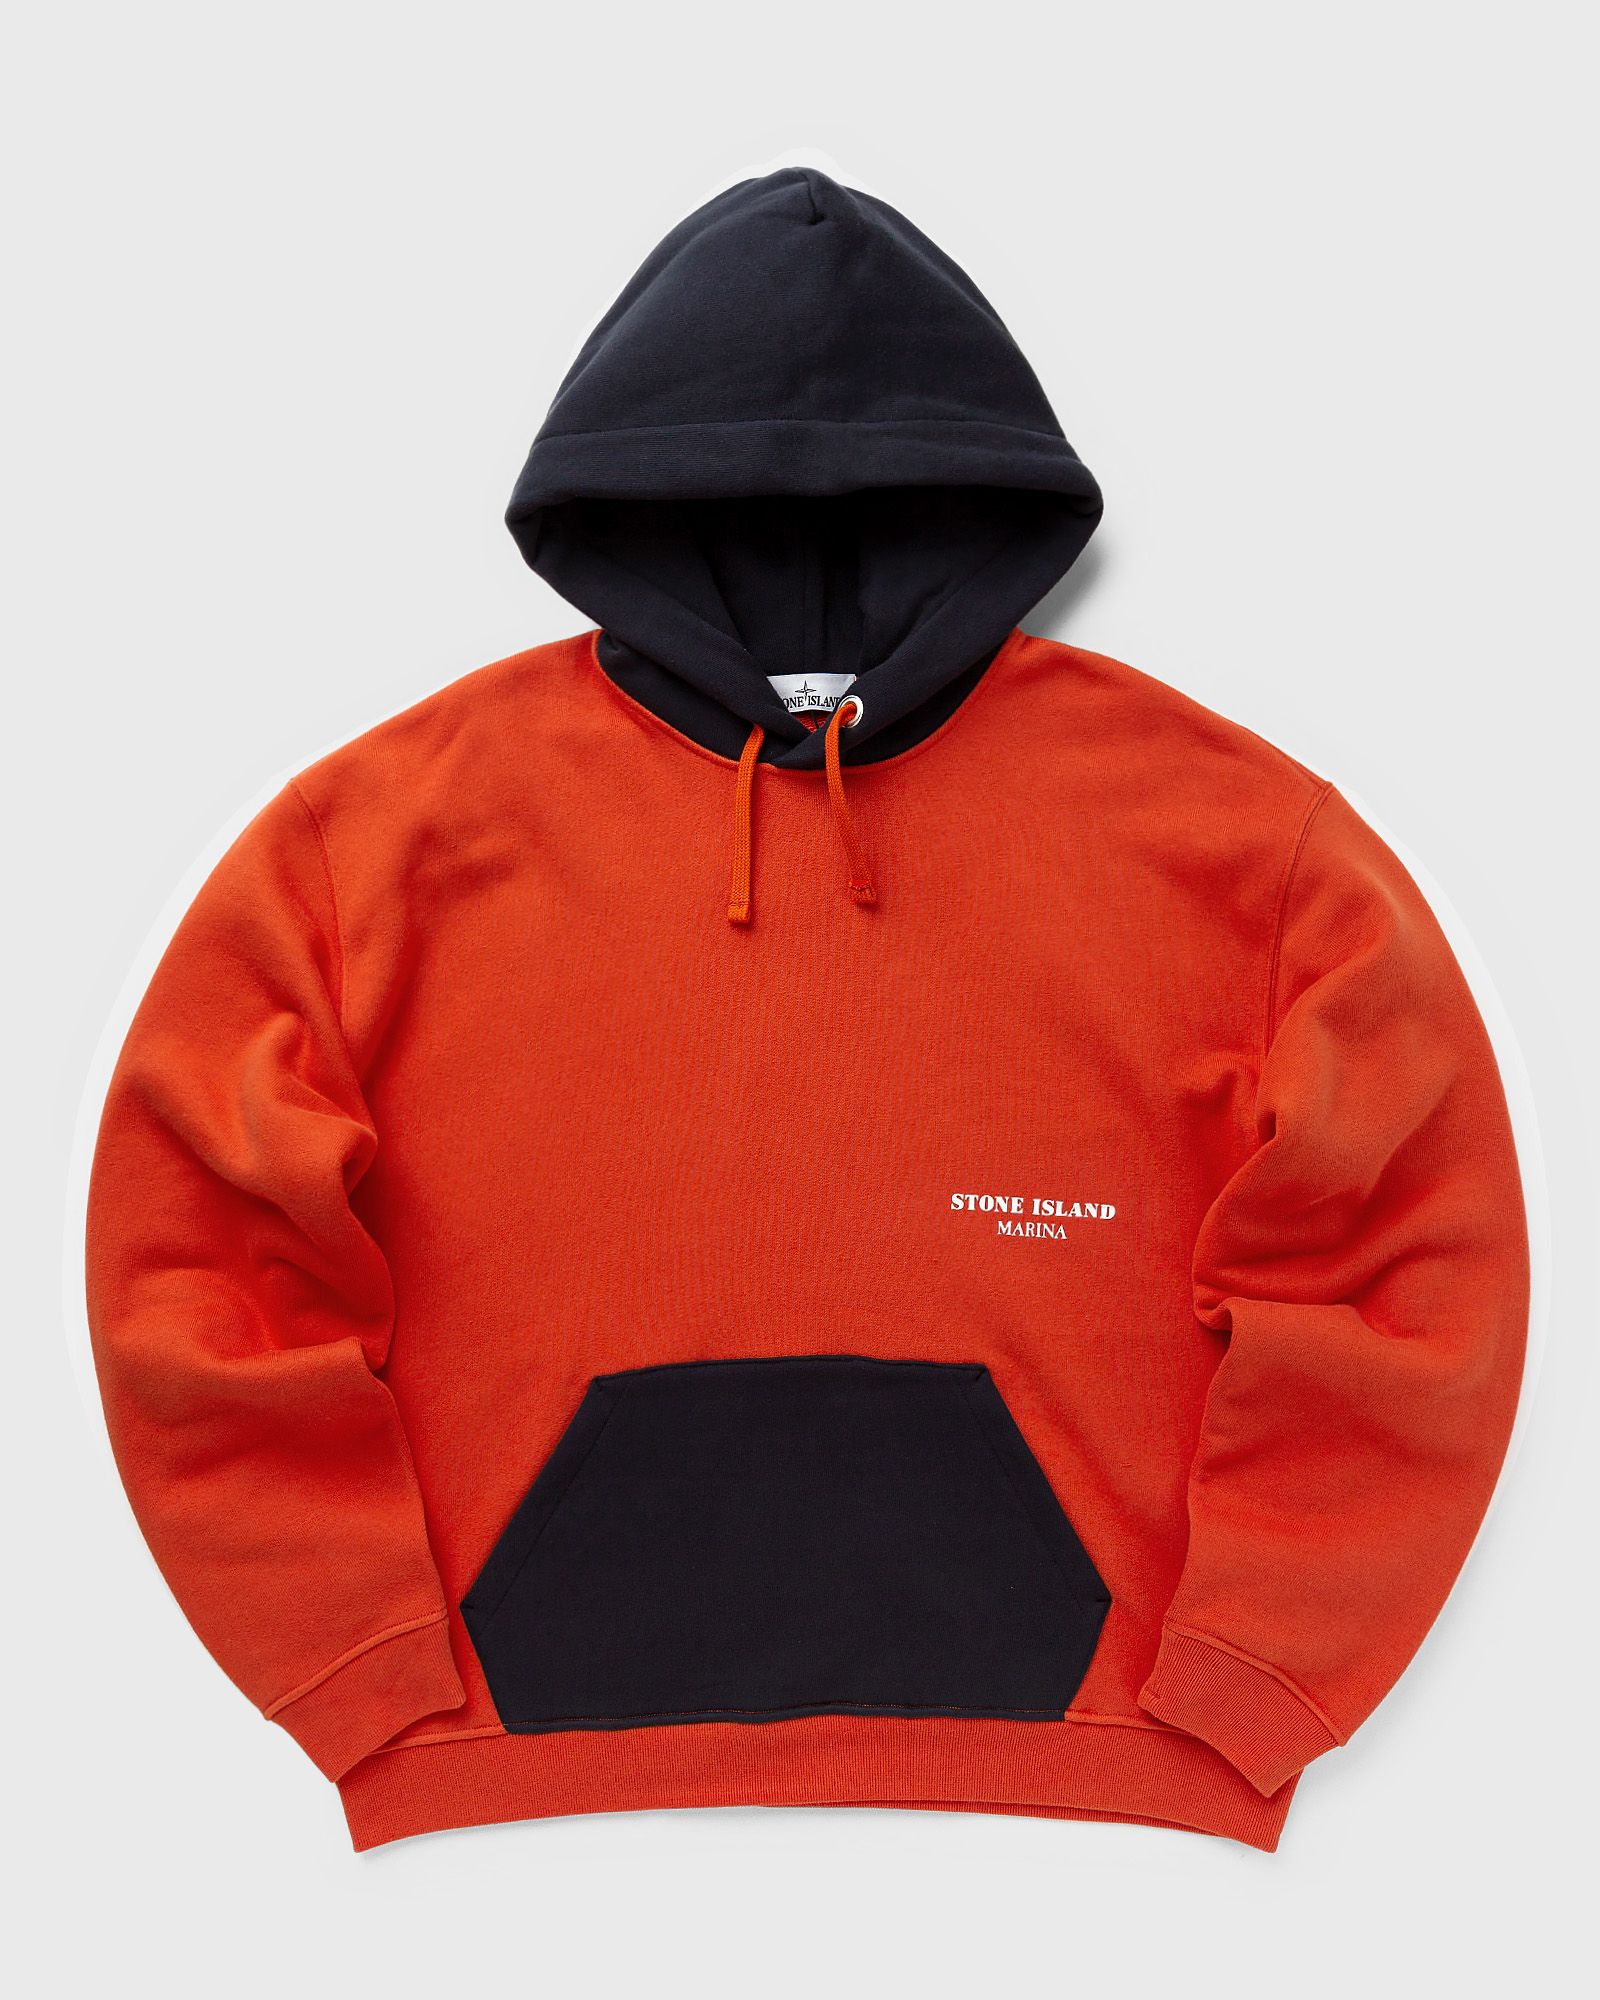 Stone Island - sweat-shirt cotton fleece_  marina men hoodies black|orange in größe:l